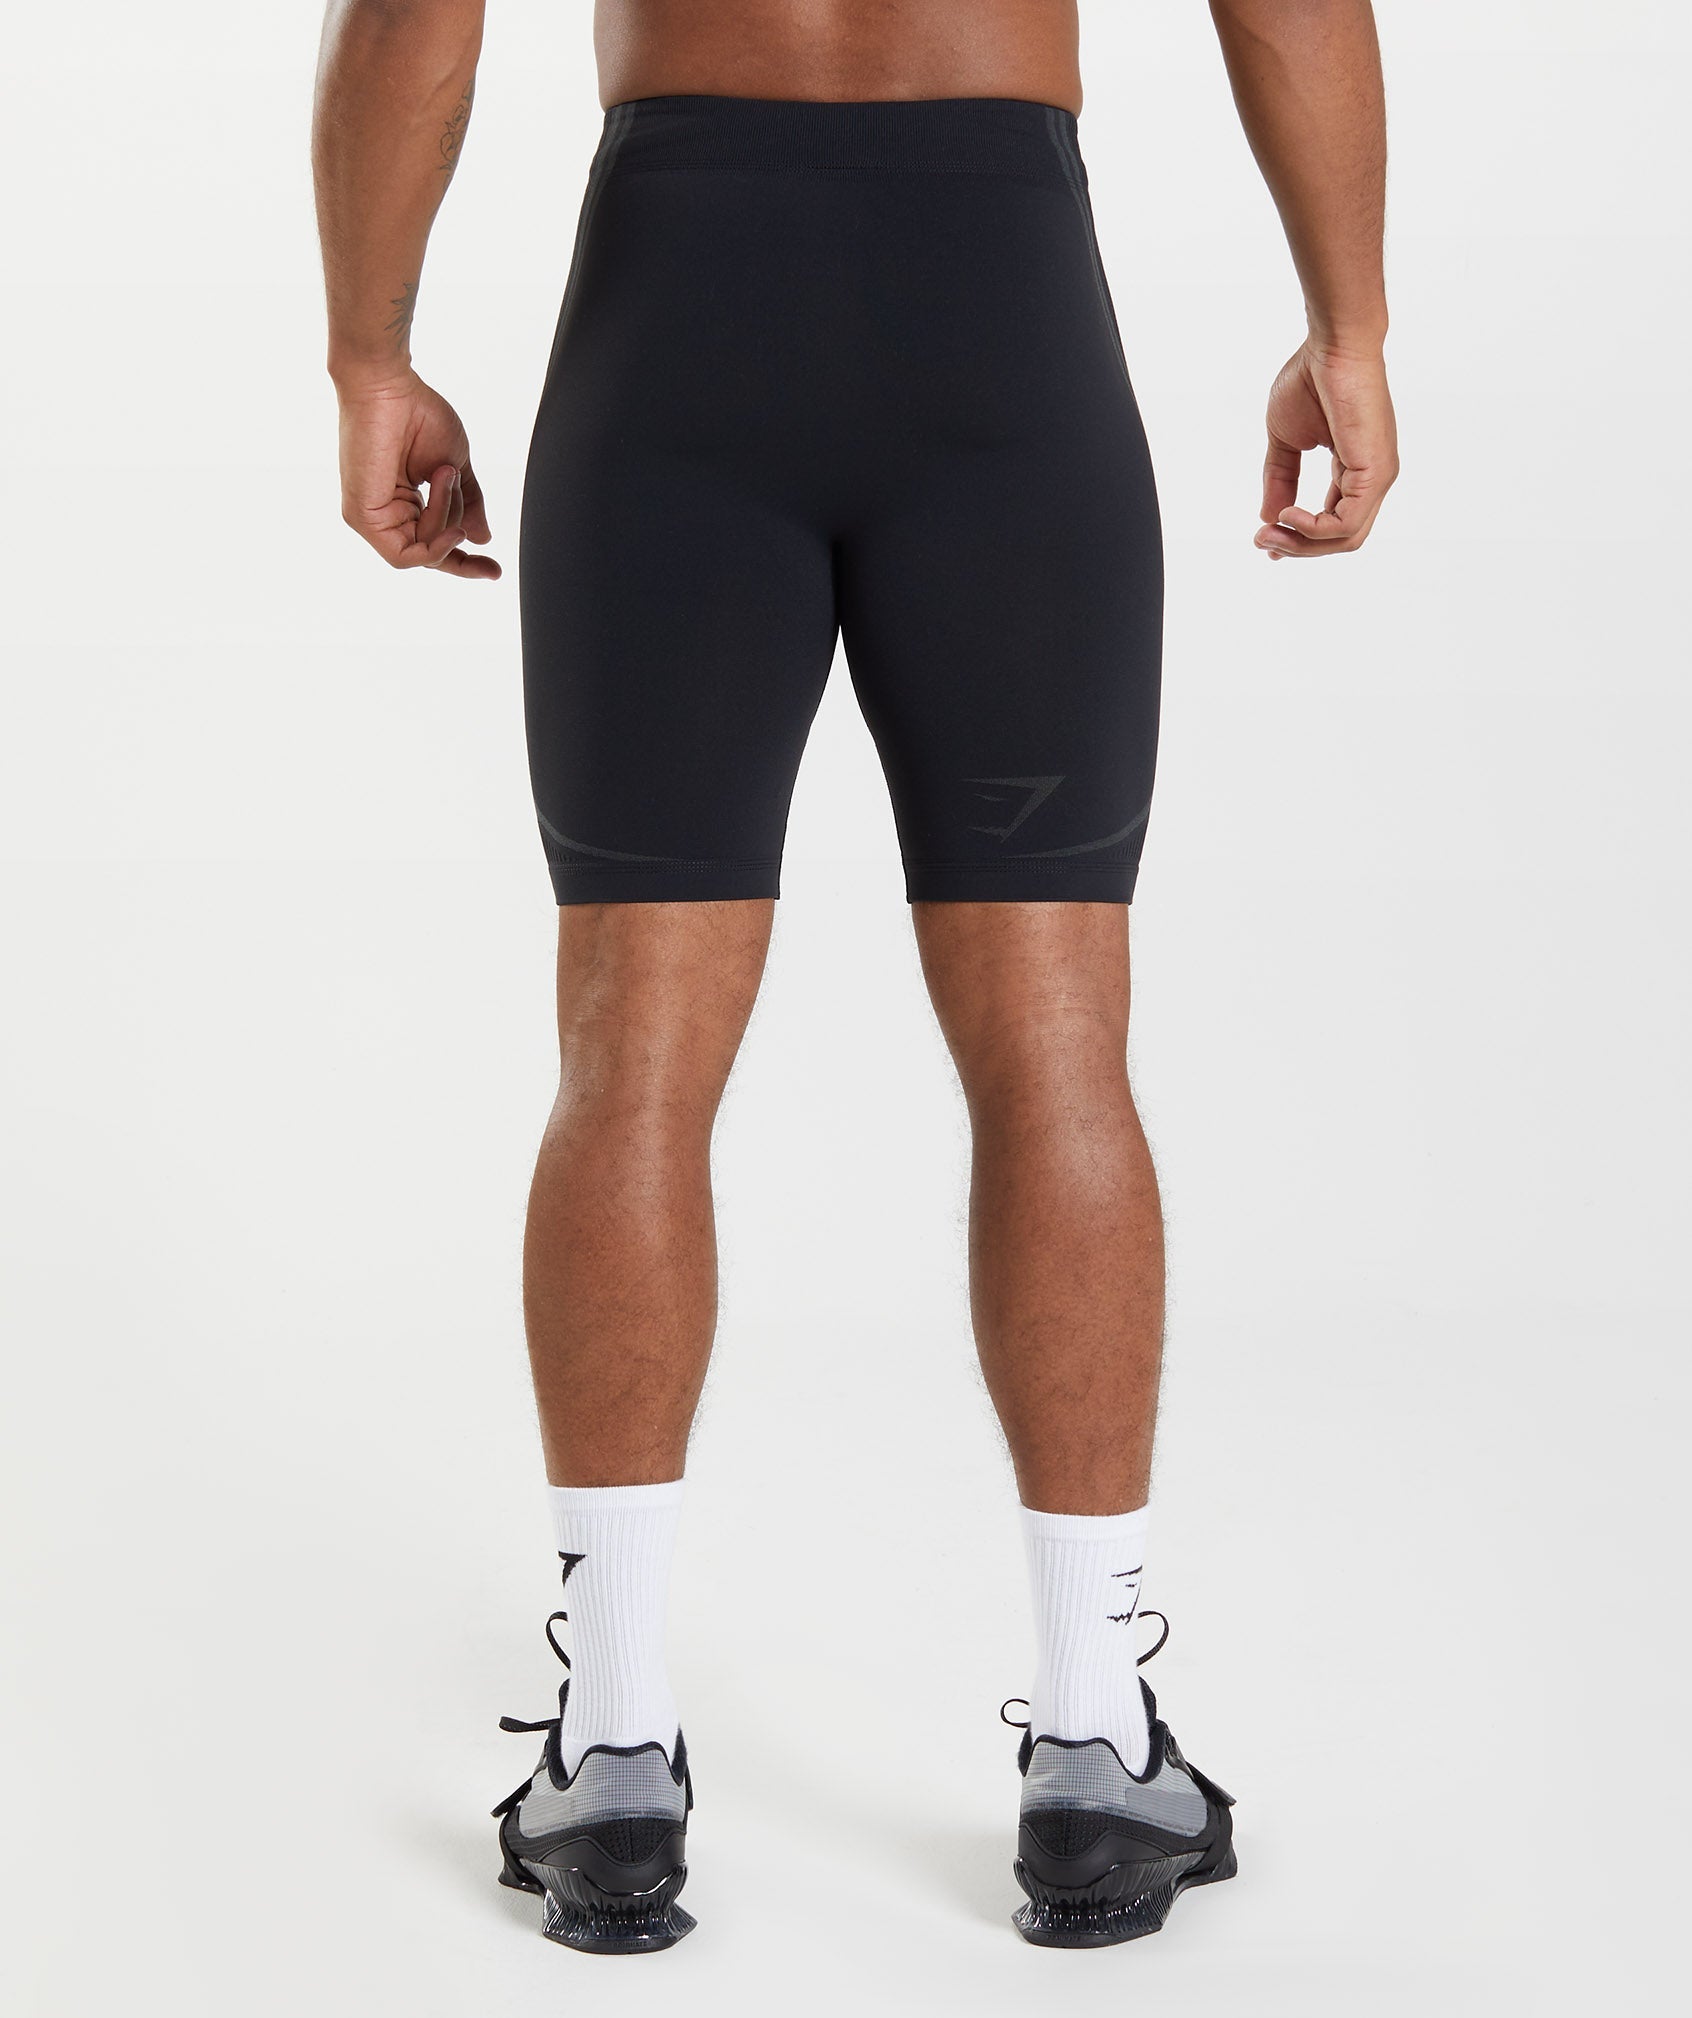 Gymshark Flex Shorts - Black/Charcoal Grey